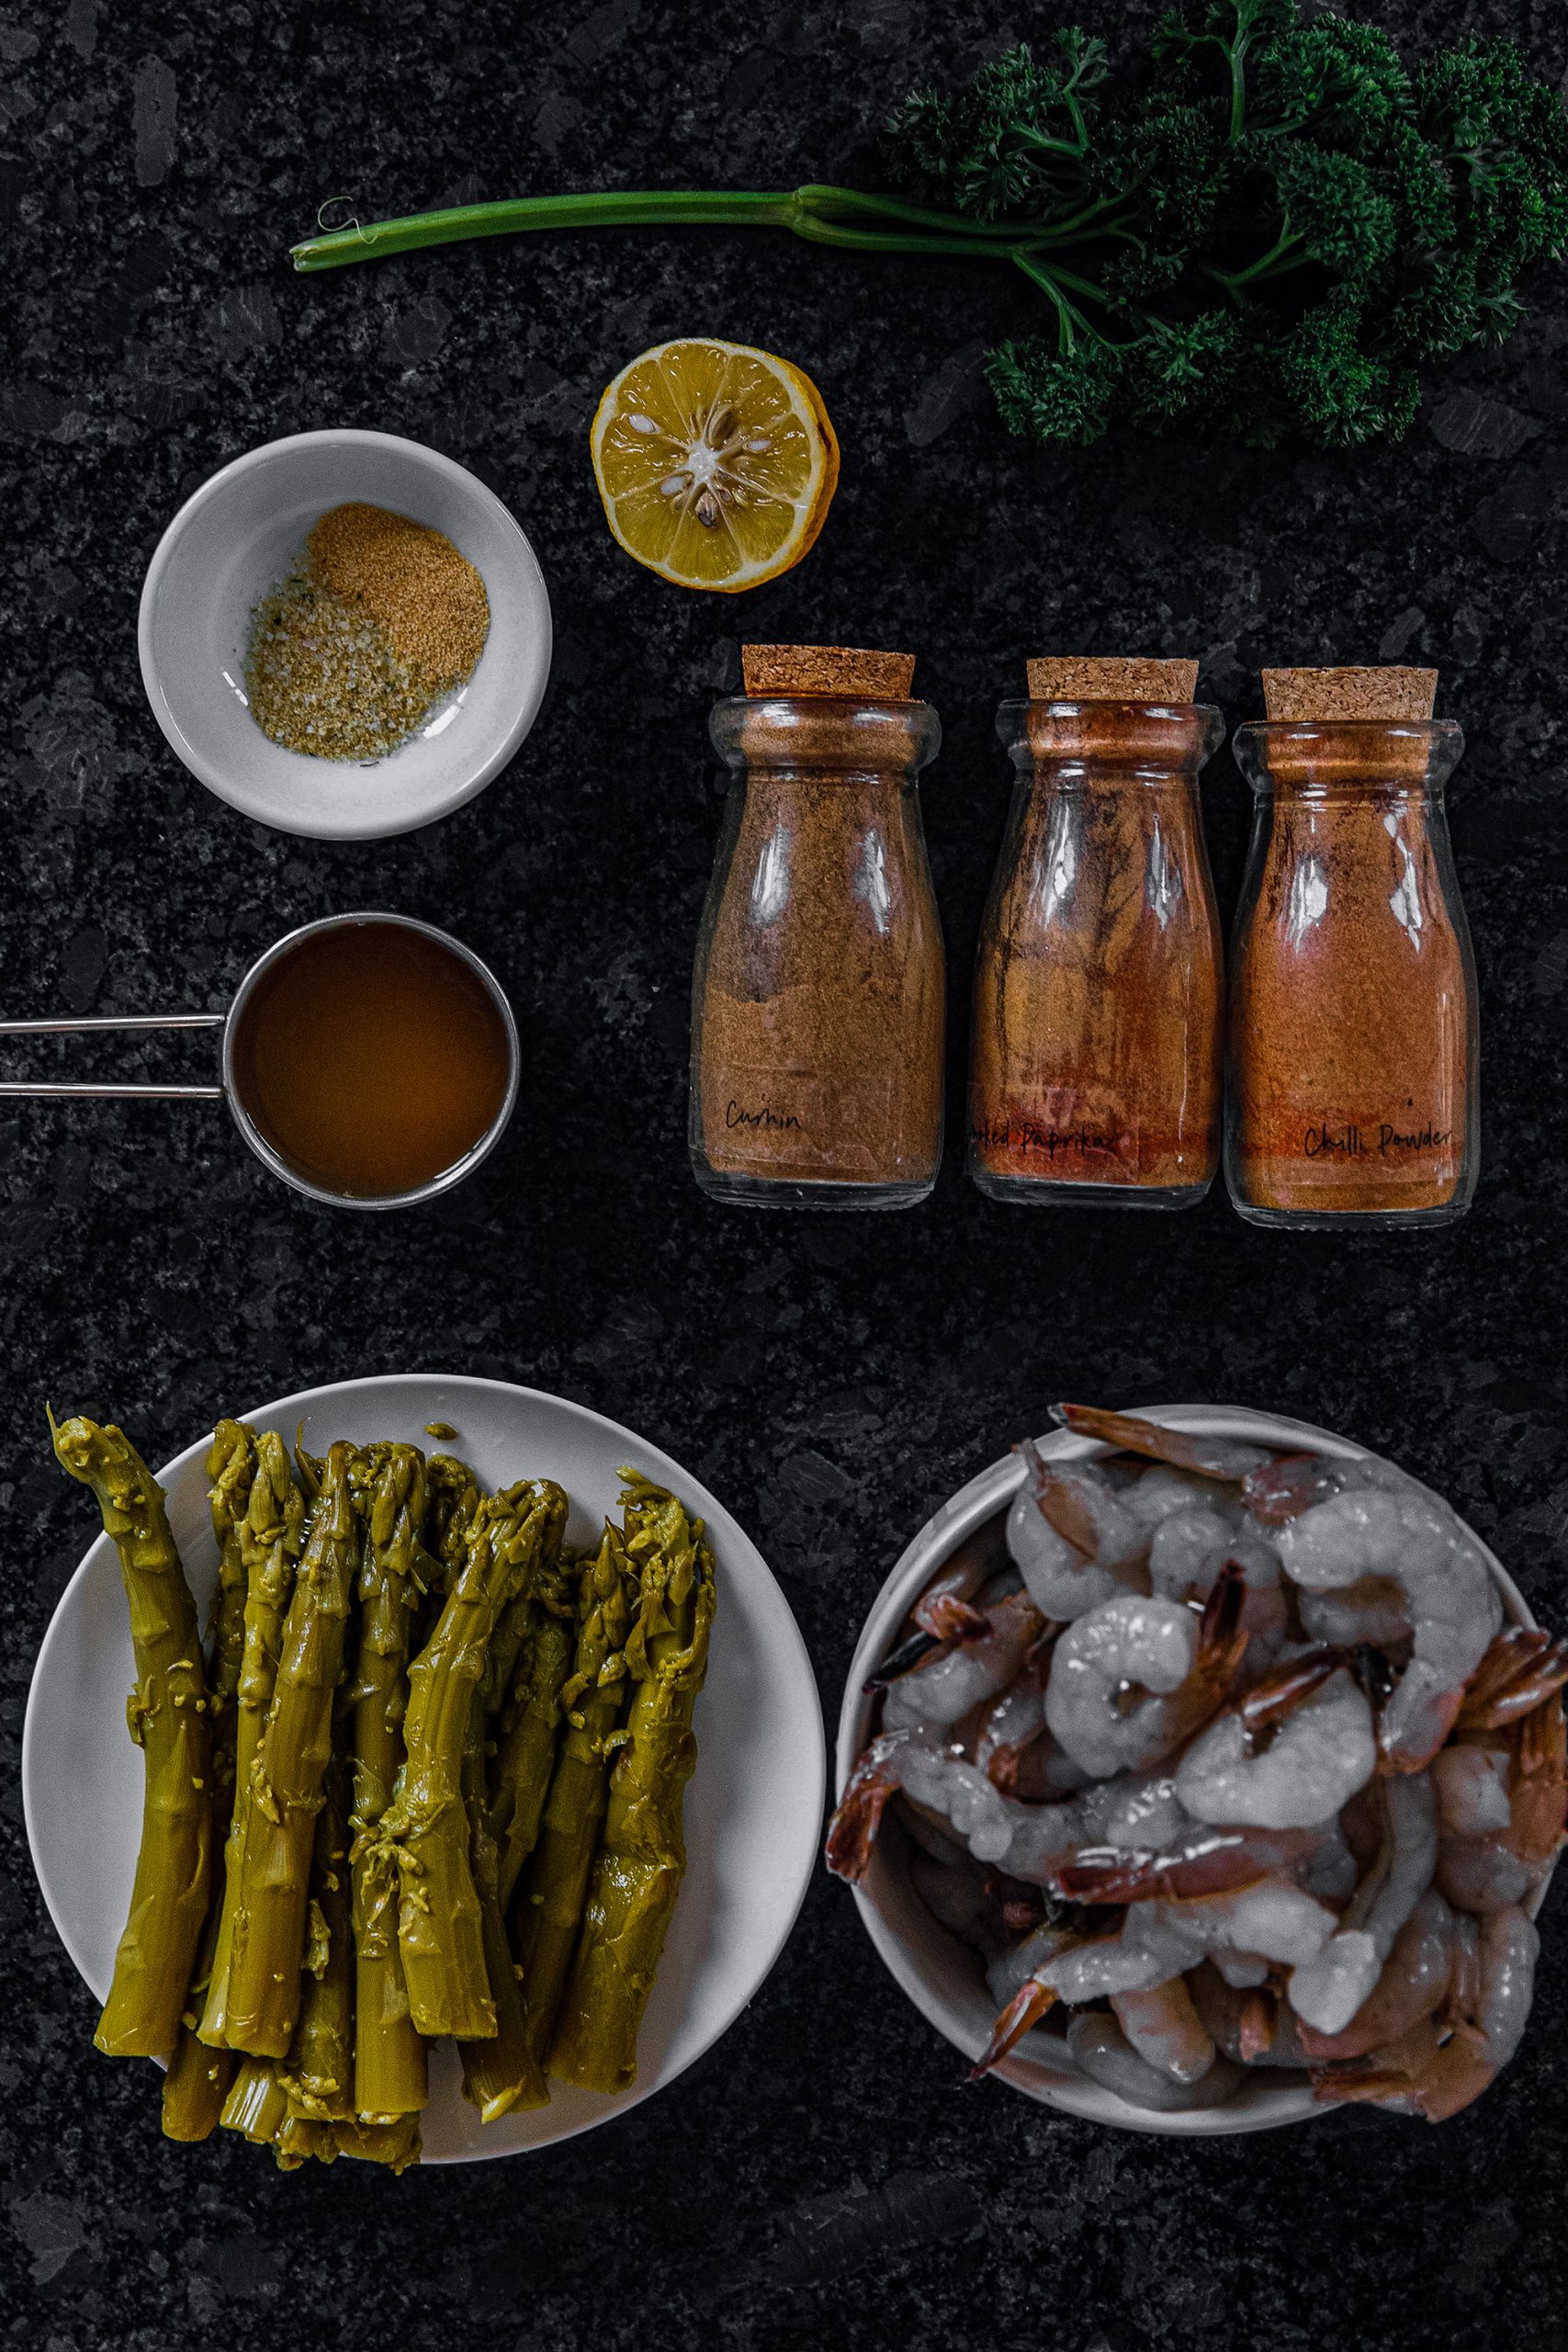 Blackened Shrimp and Asparagus Ingredients